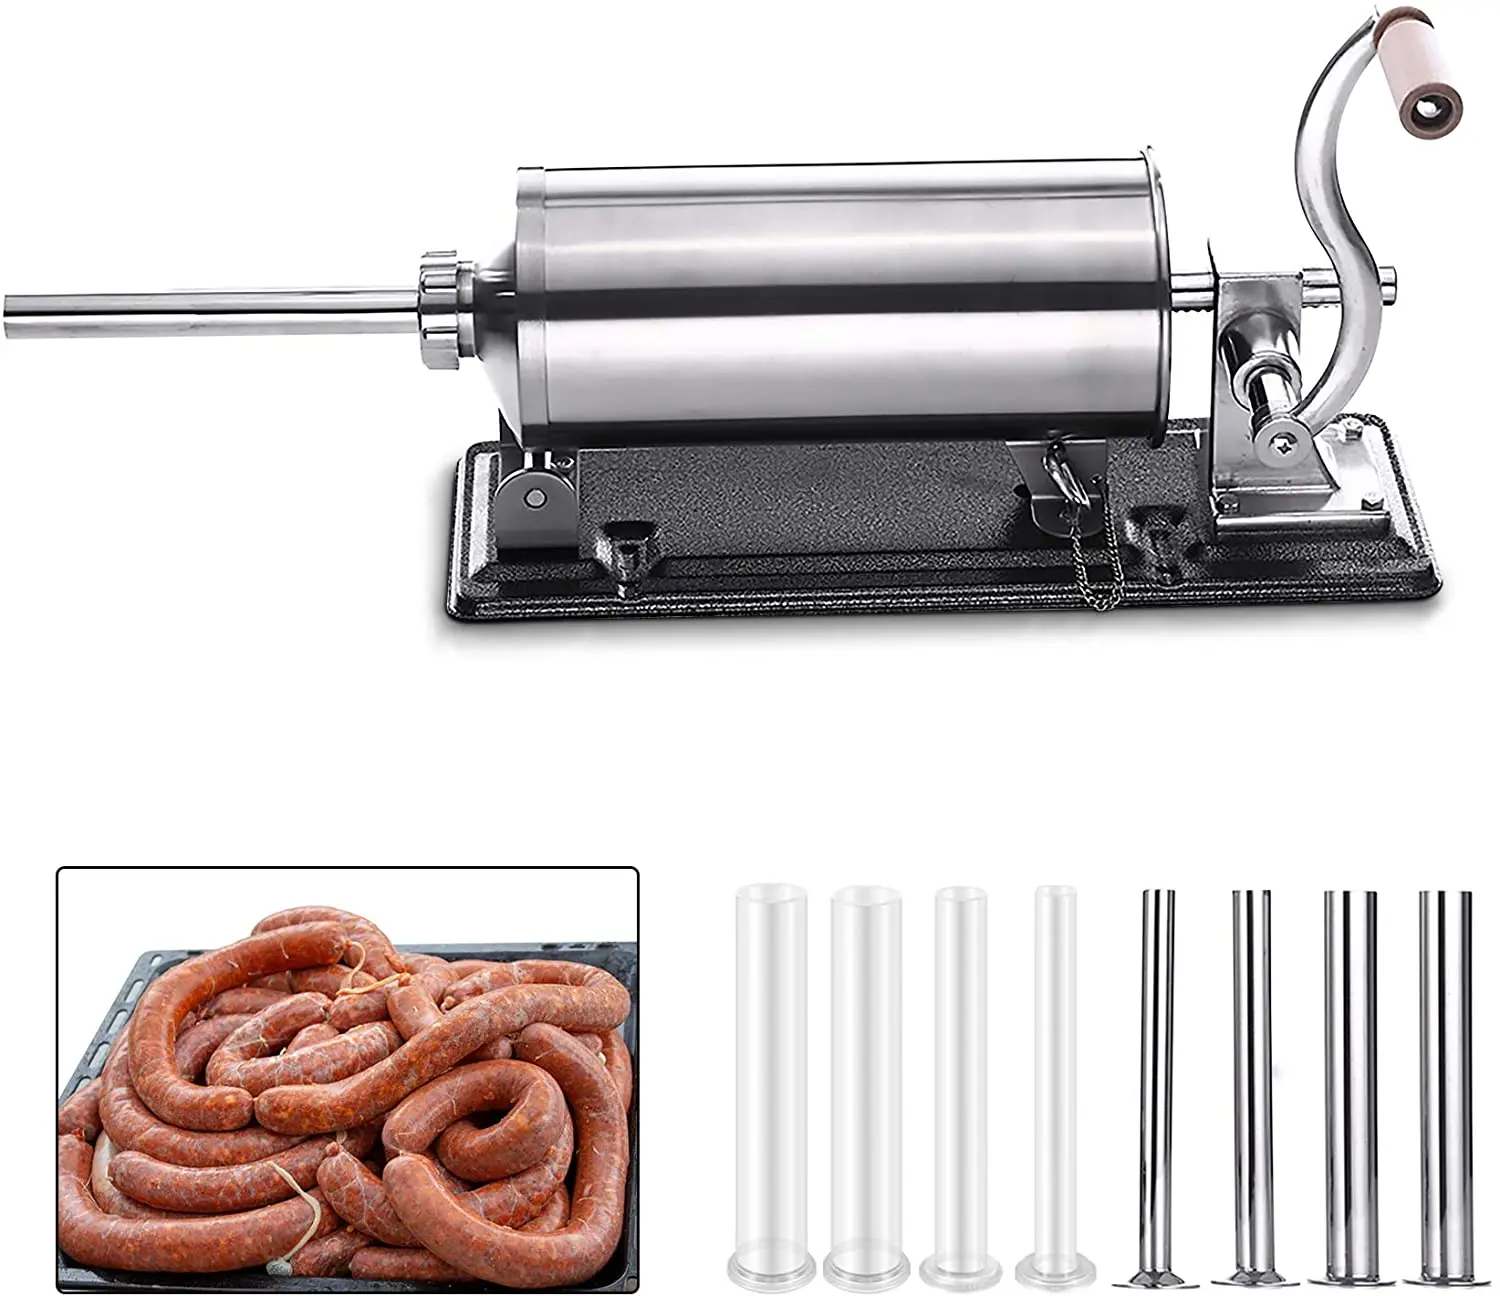 

6 LBS/ 3KG Homemade Sausage Stuffer Stainless Steel Sausage Filling Machine Sausage Syringe Meat Filler Sausage Maker